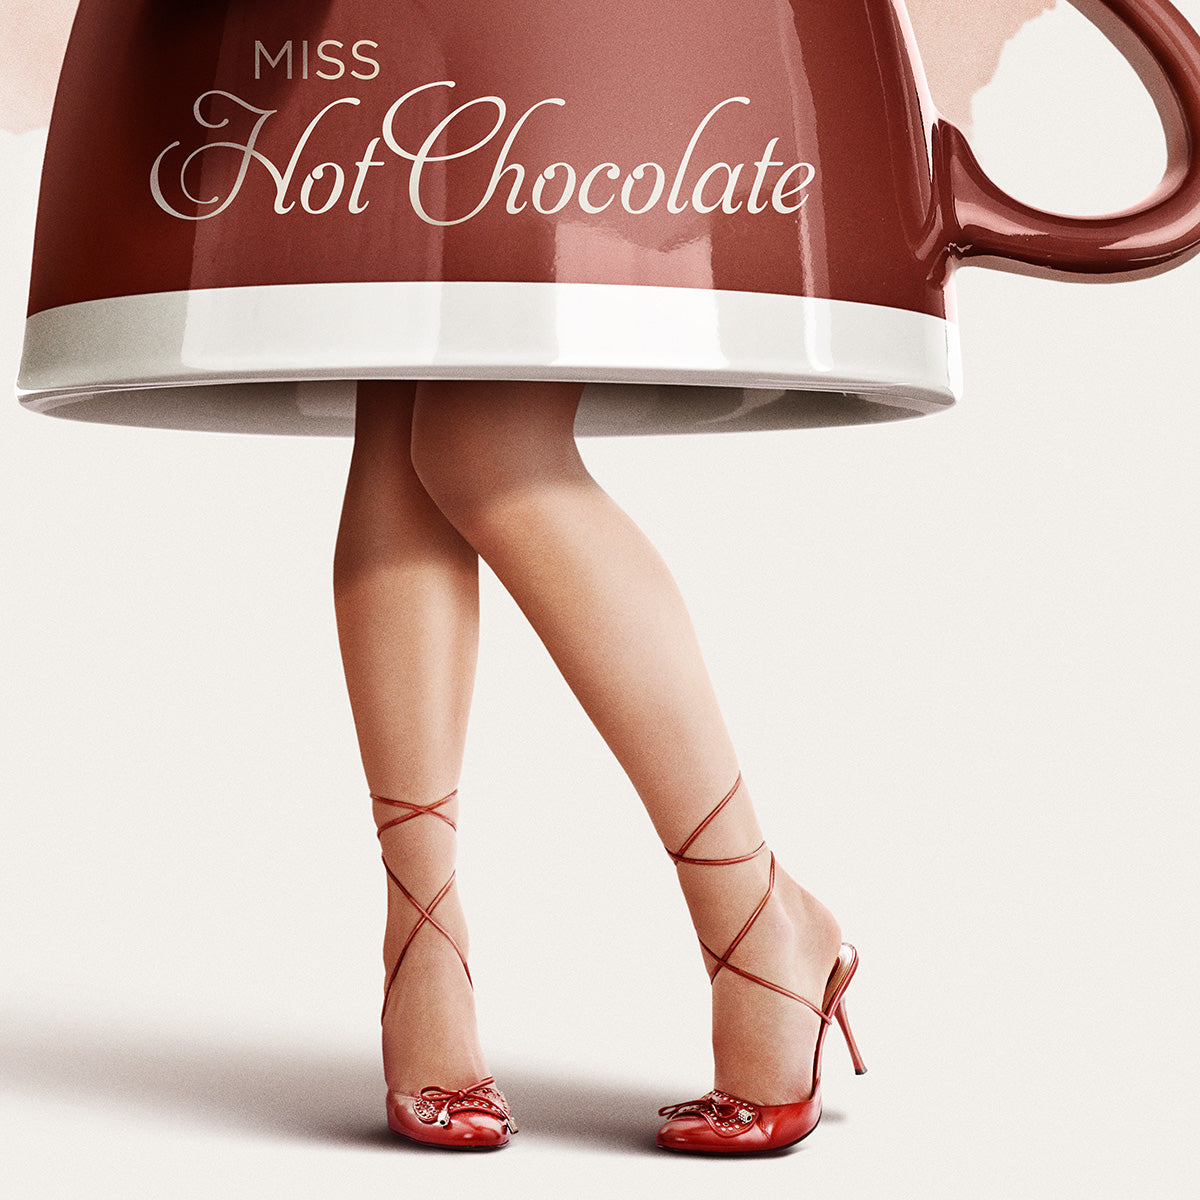 Miss Hot Chocolate